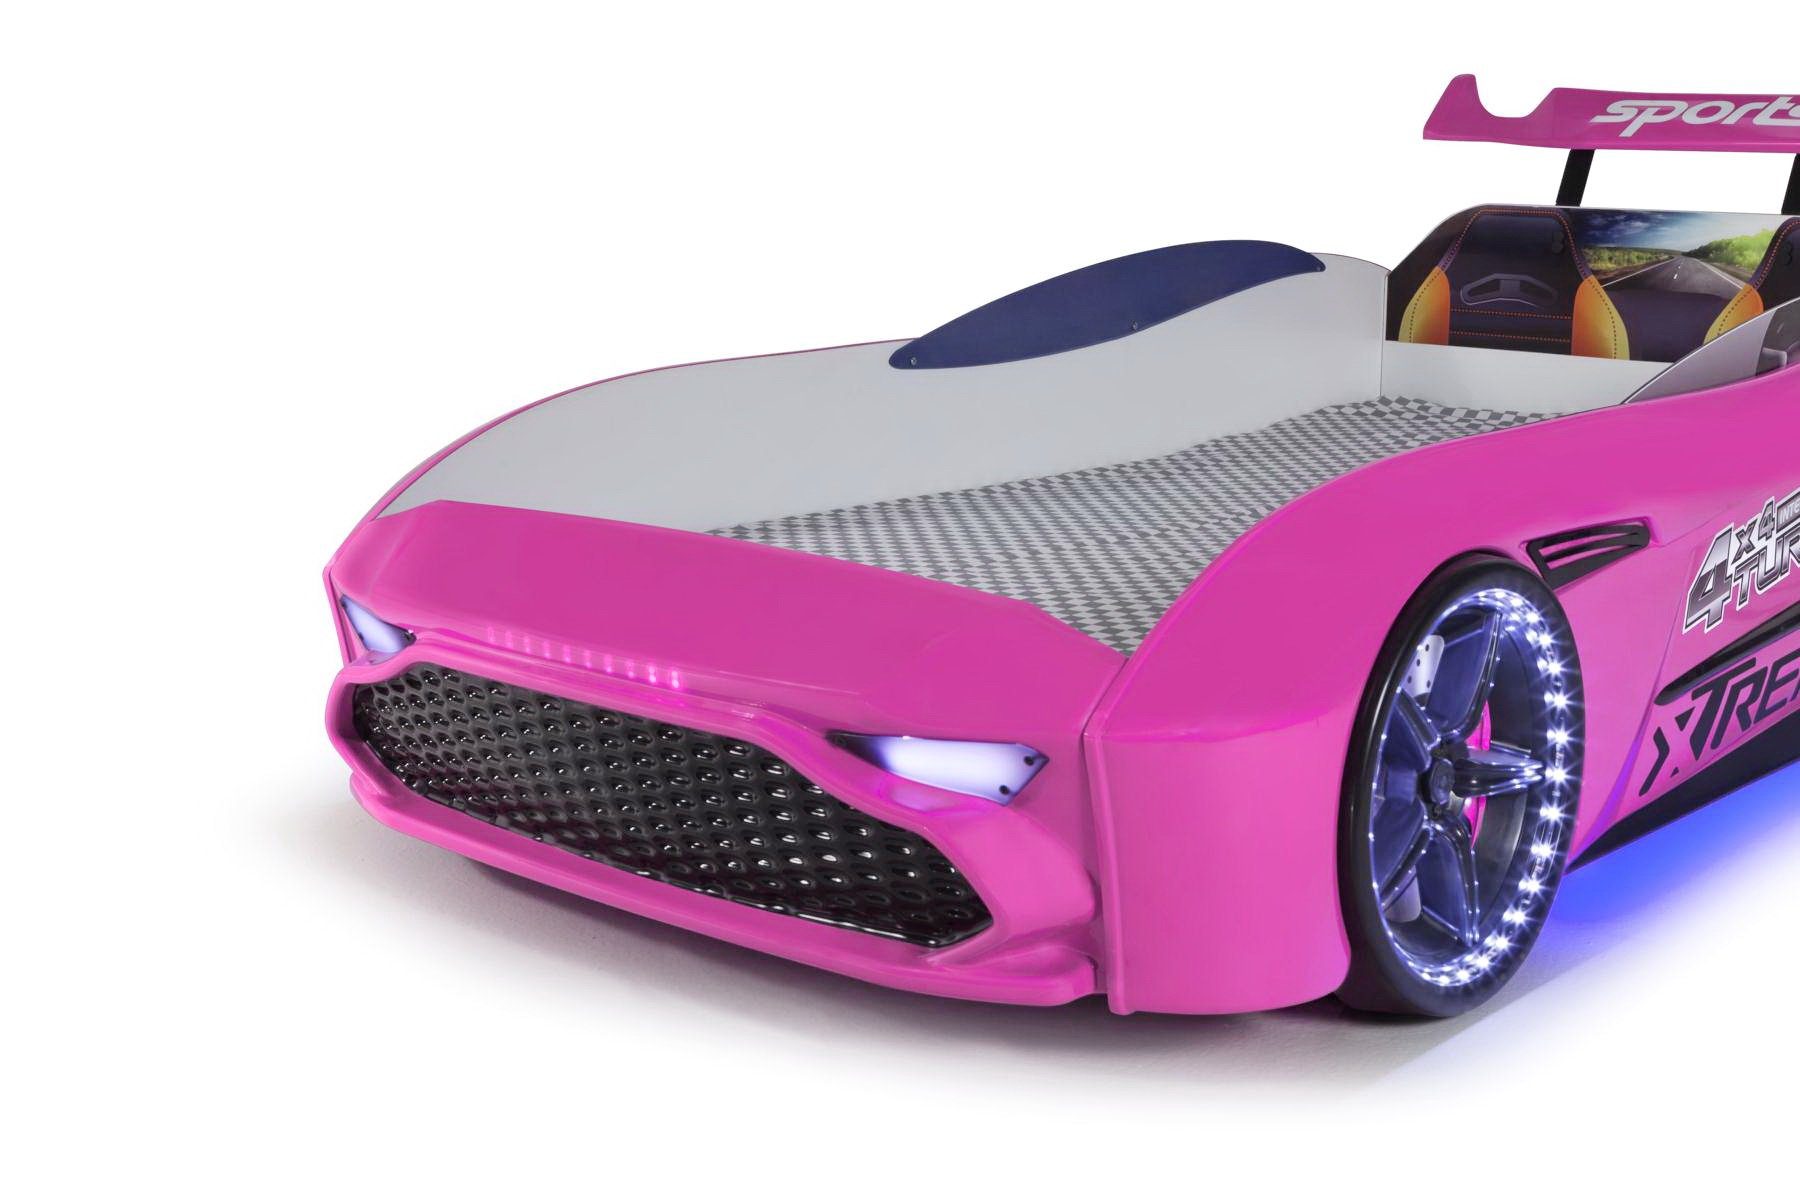 Möbel-Lux Kinderbett GT18 Extreme, Bluetooth GT18 mit Pink Autobett 4x4 Extreme Turbo